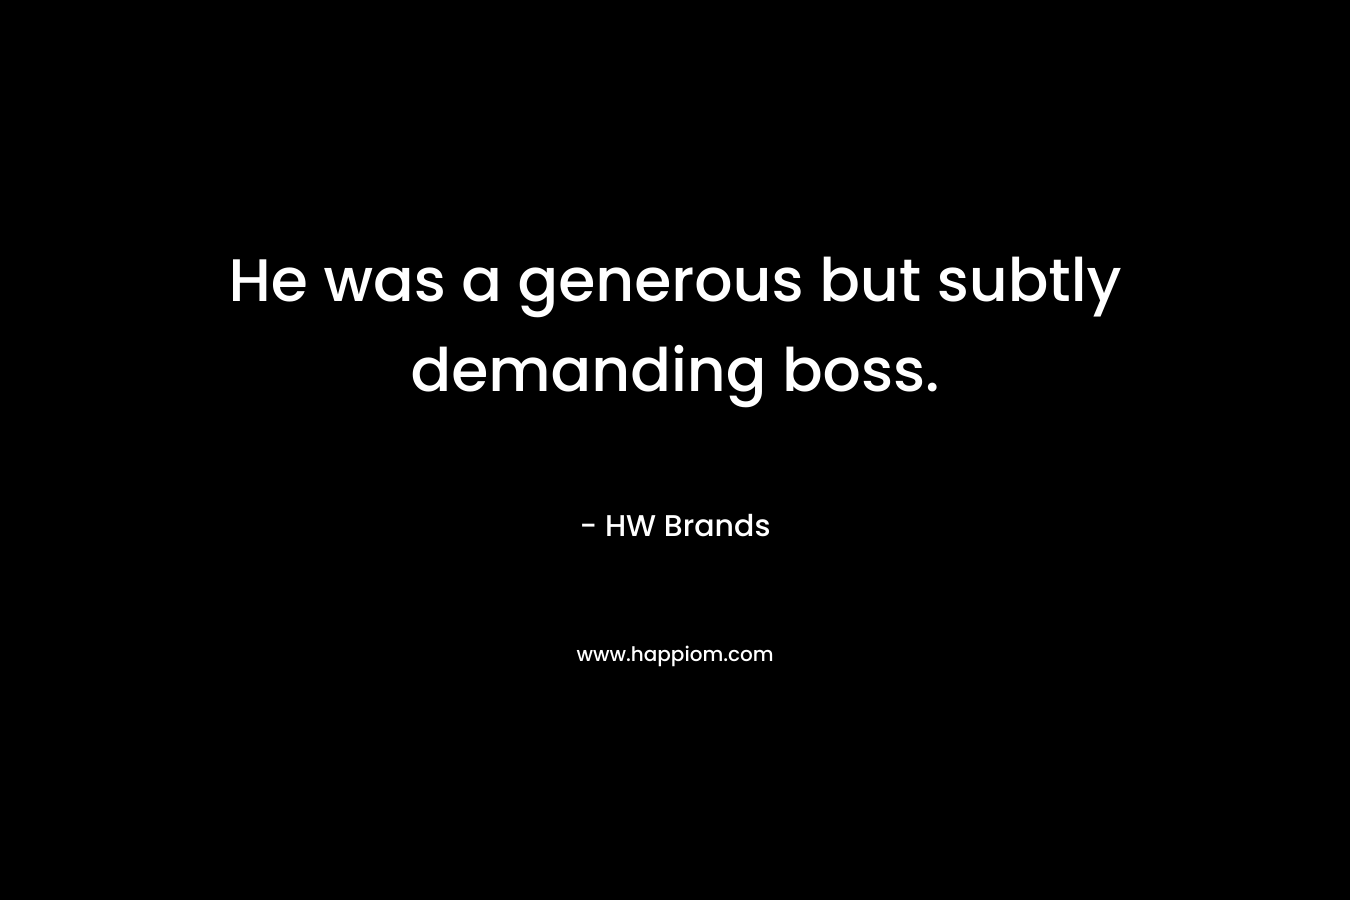 He was a generous but subtly demanding boss.